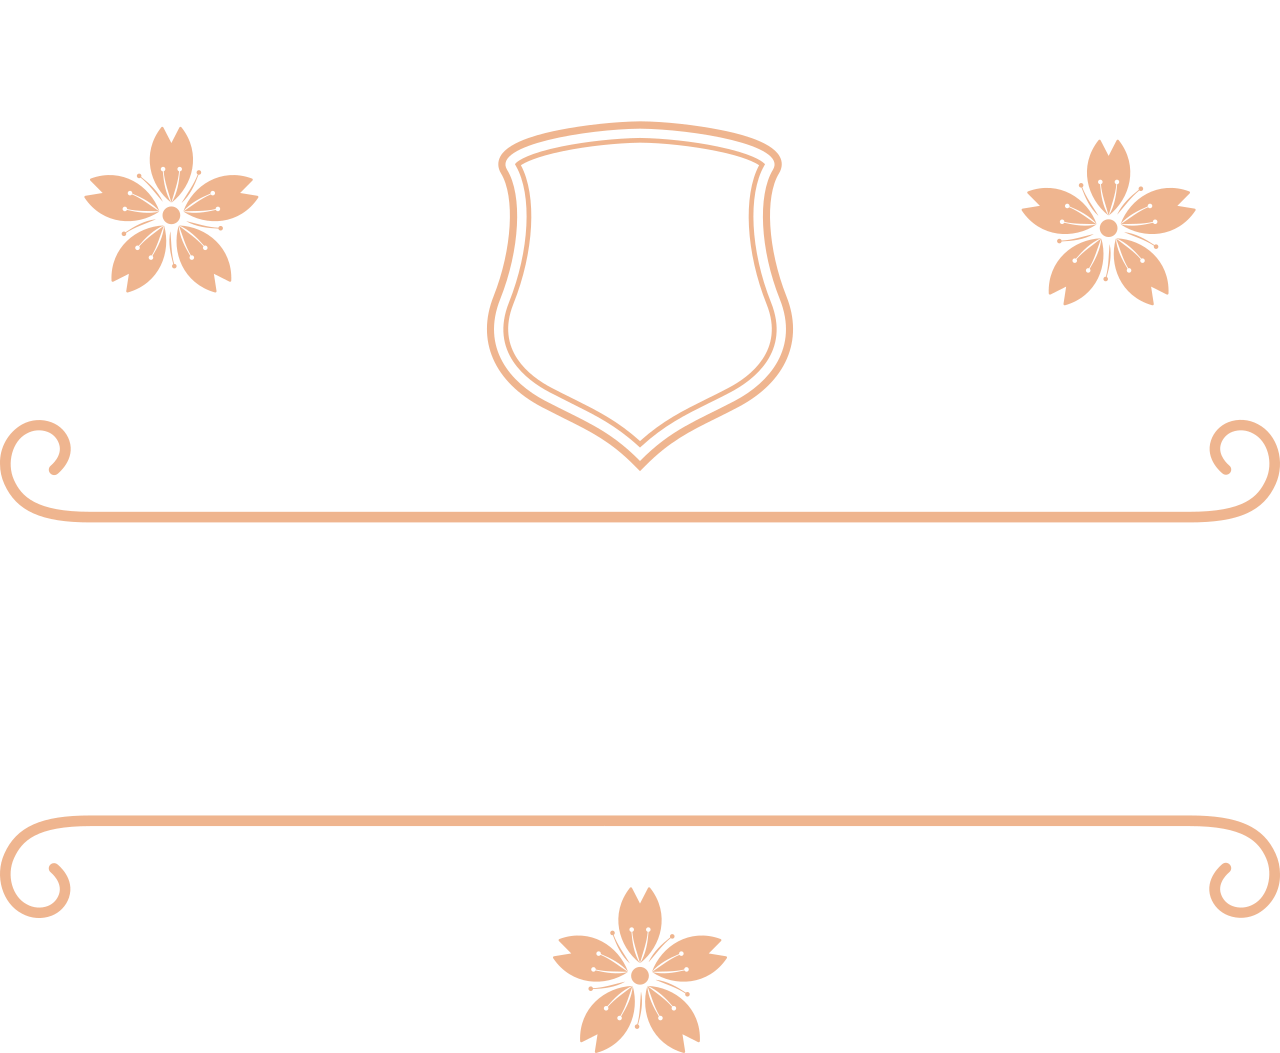 Macu's logo